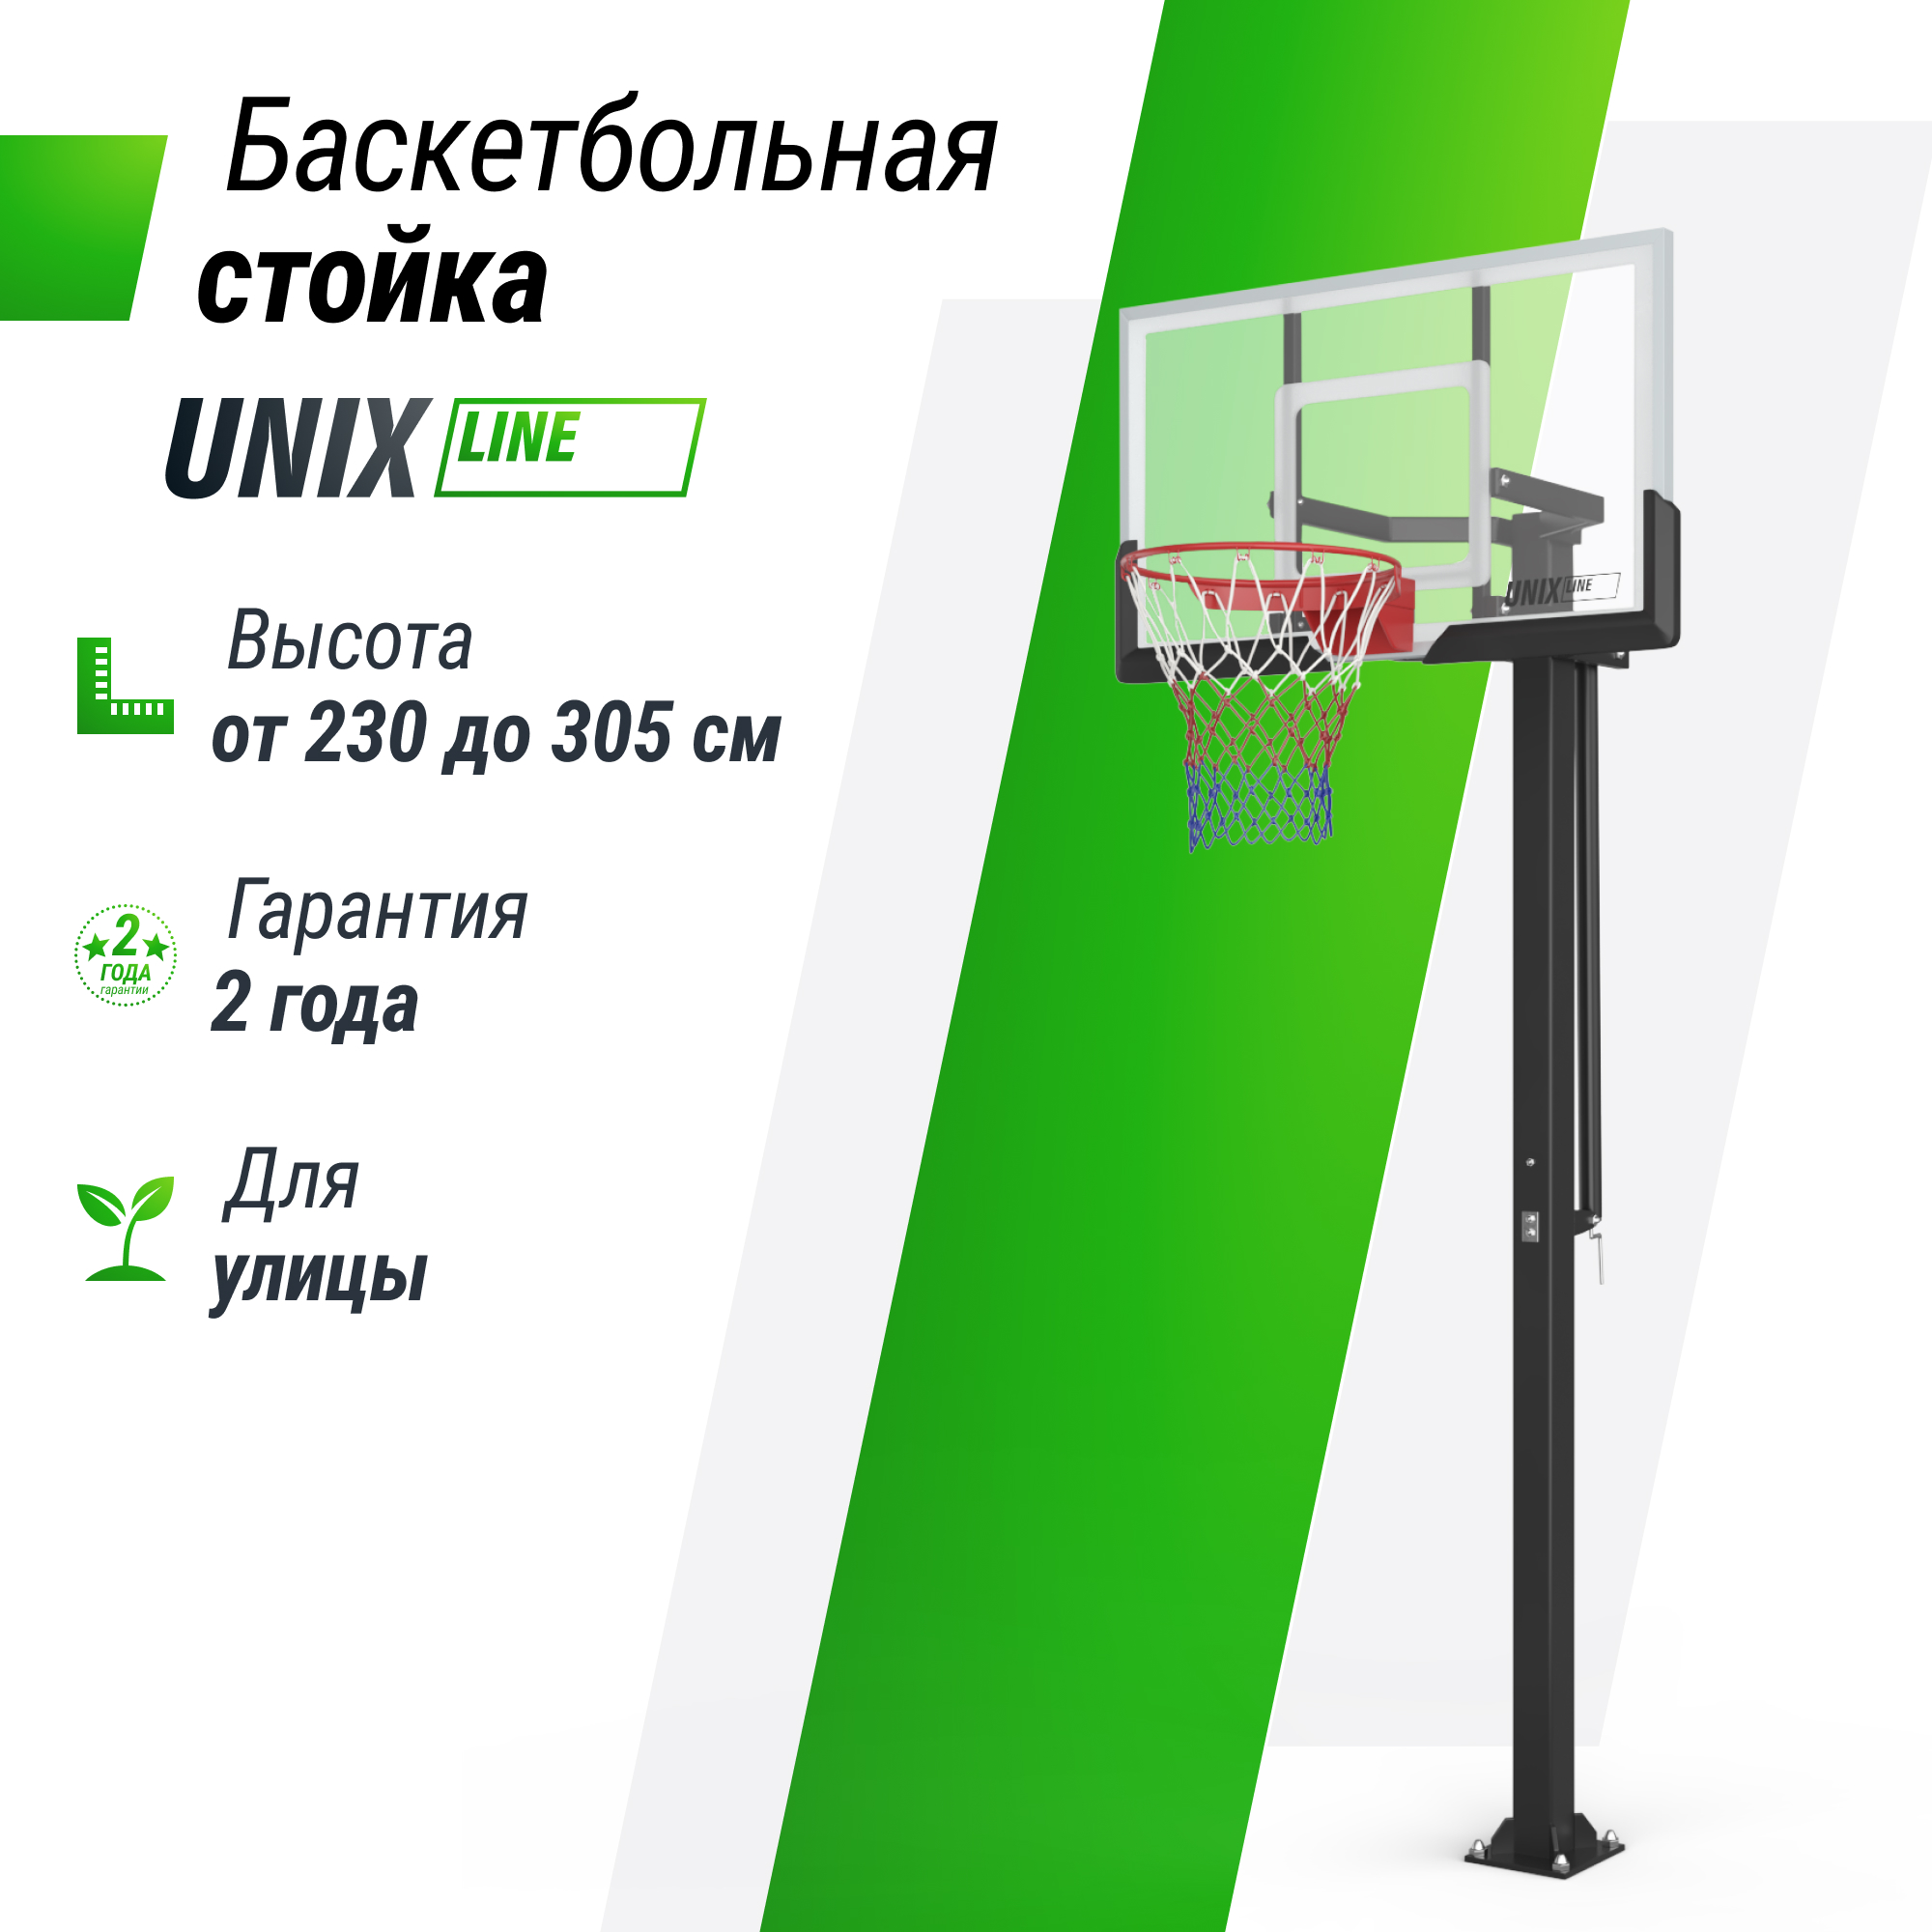 Баскетбольная стойка стационарная 54"x32" R45 H230-305см Unix Line B-Stand-TG BSTSSTPR305_54TGBK 2000_2000